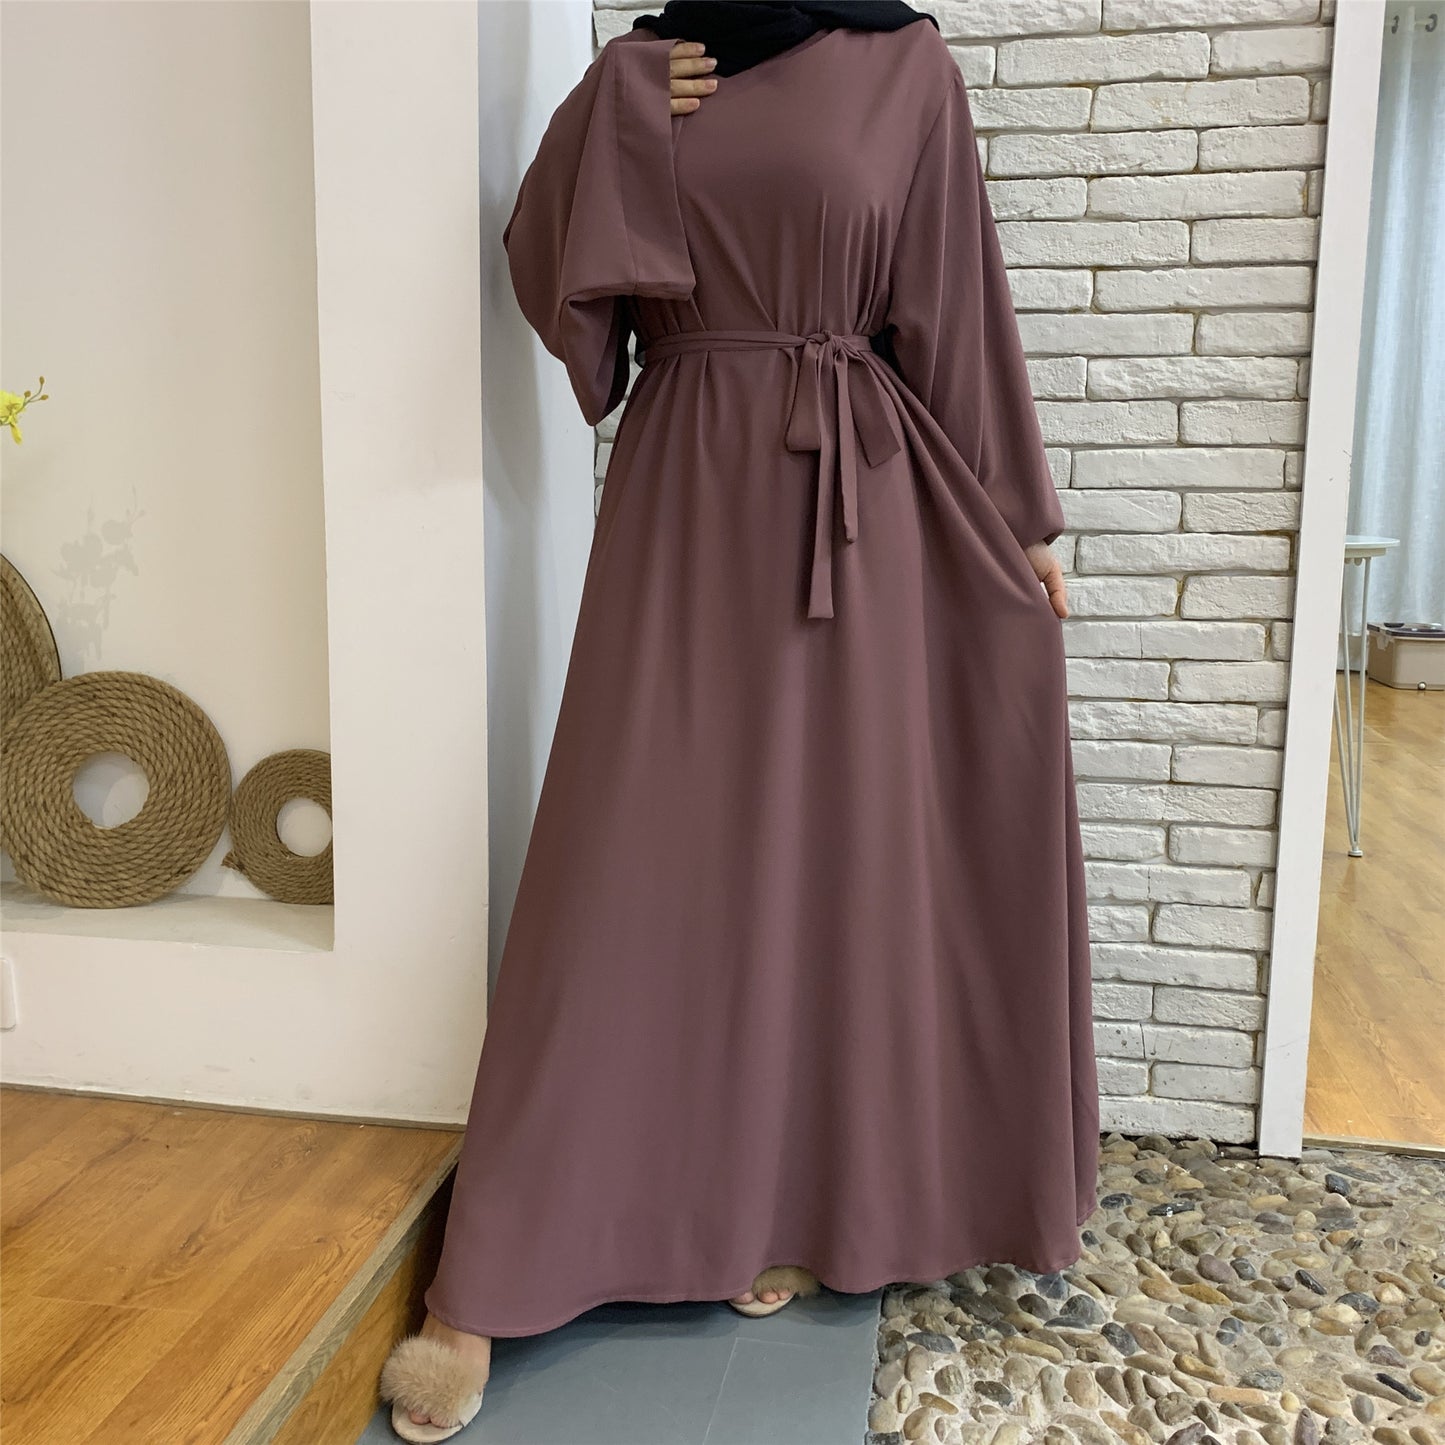 Hijab Dress abaya for Women Islamic Clothing